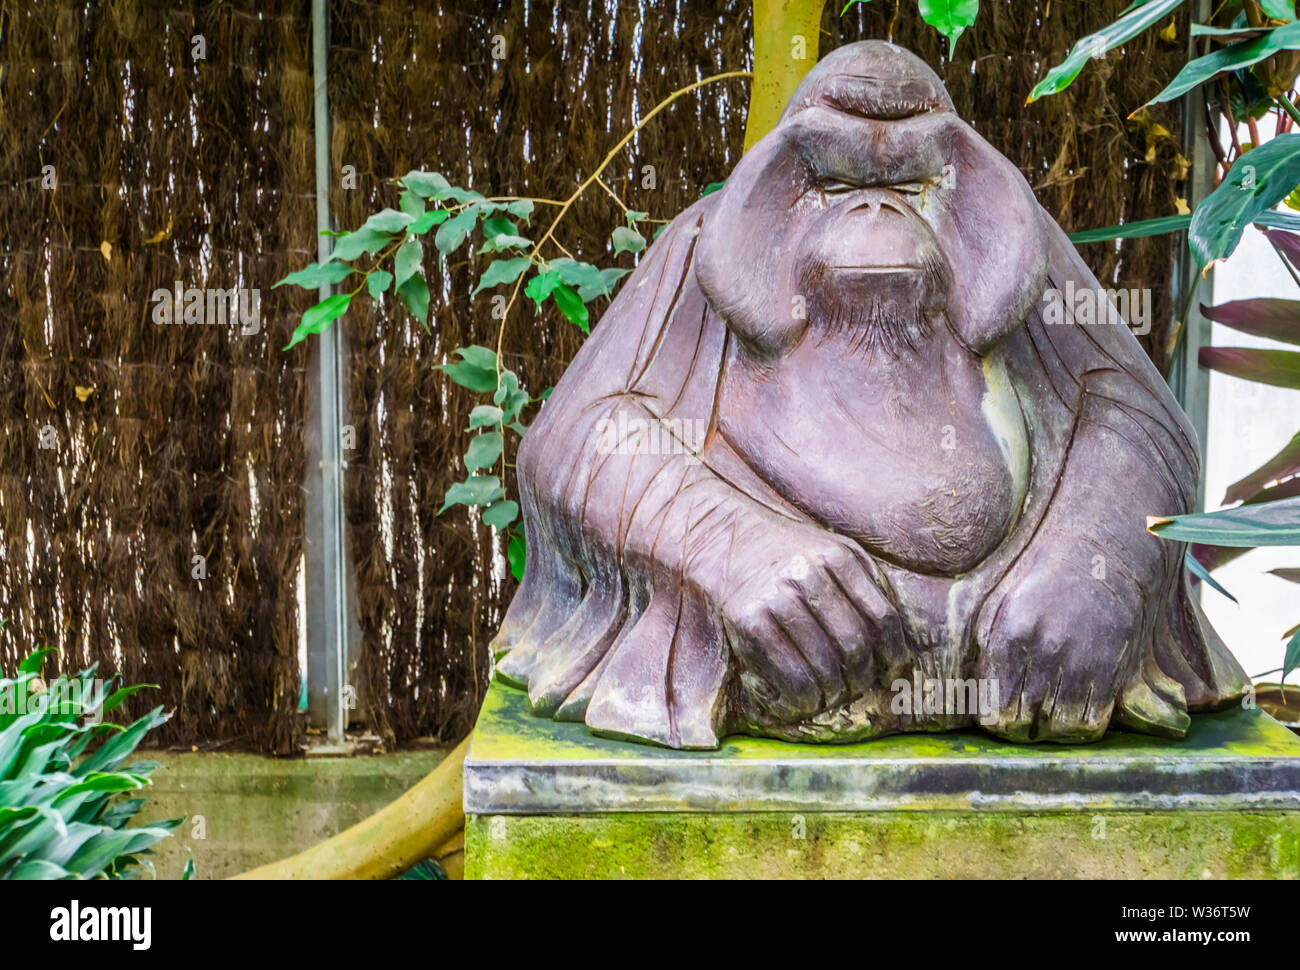 marble animal statue of a orangutan, Big ape sculpture, tropical garden  decoration Stock Photo - Alamy